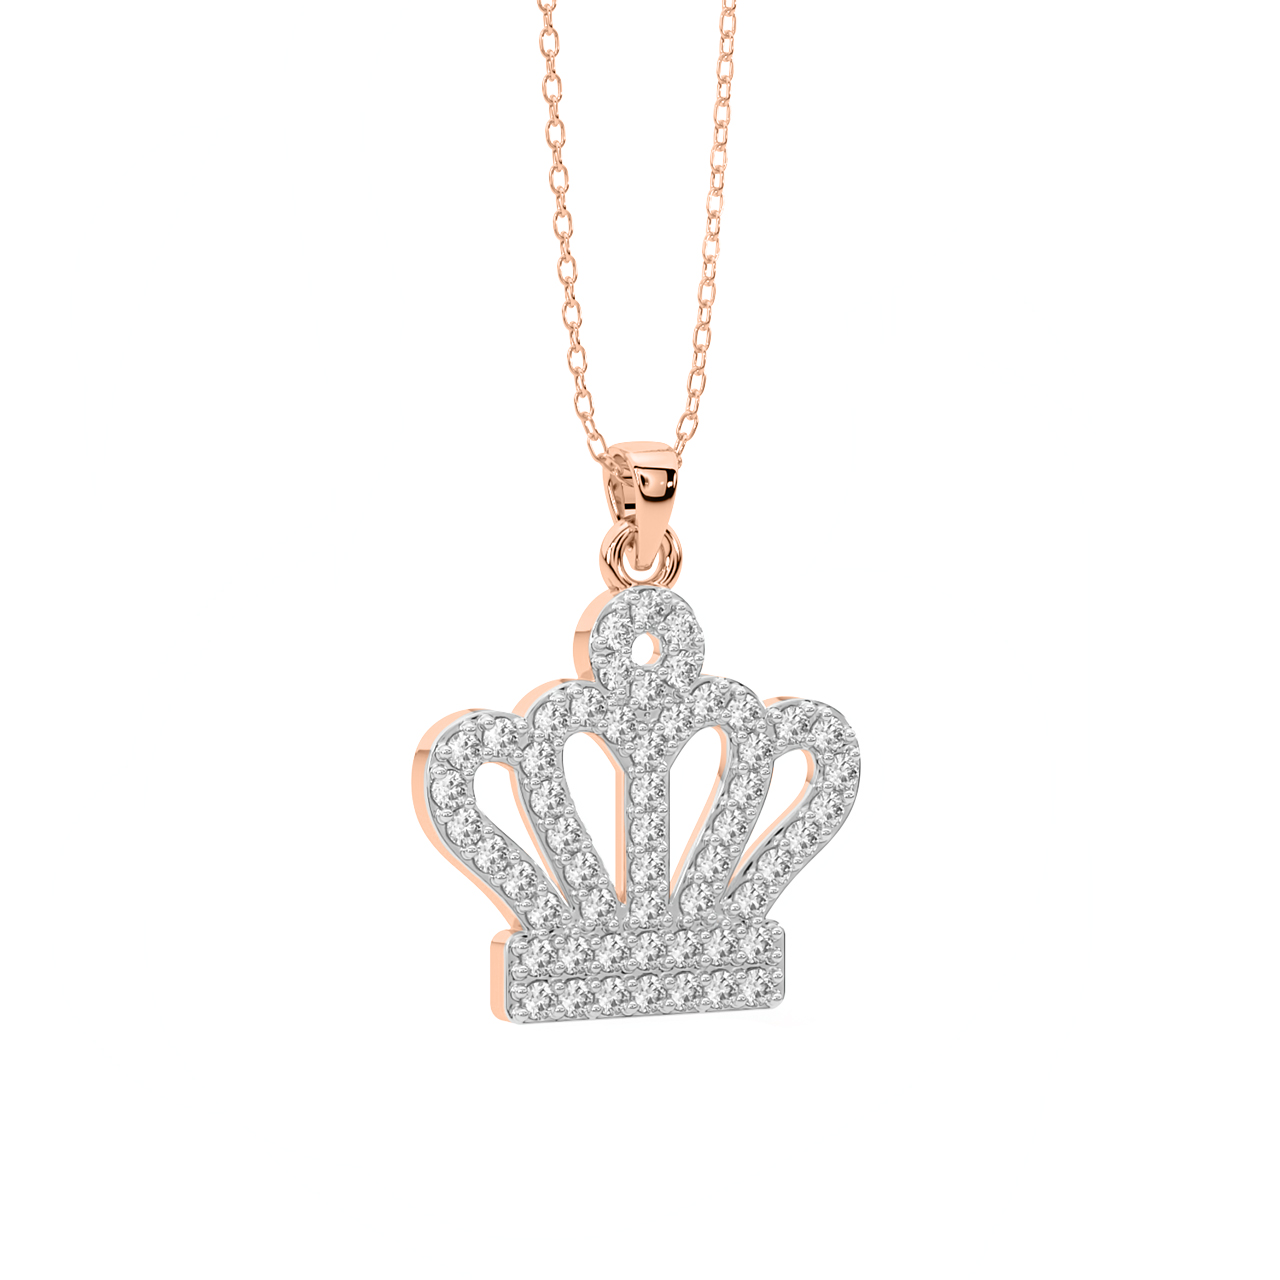 Queen's Crown Diamond Pendant